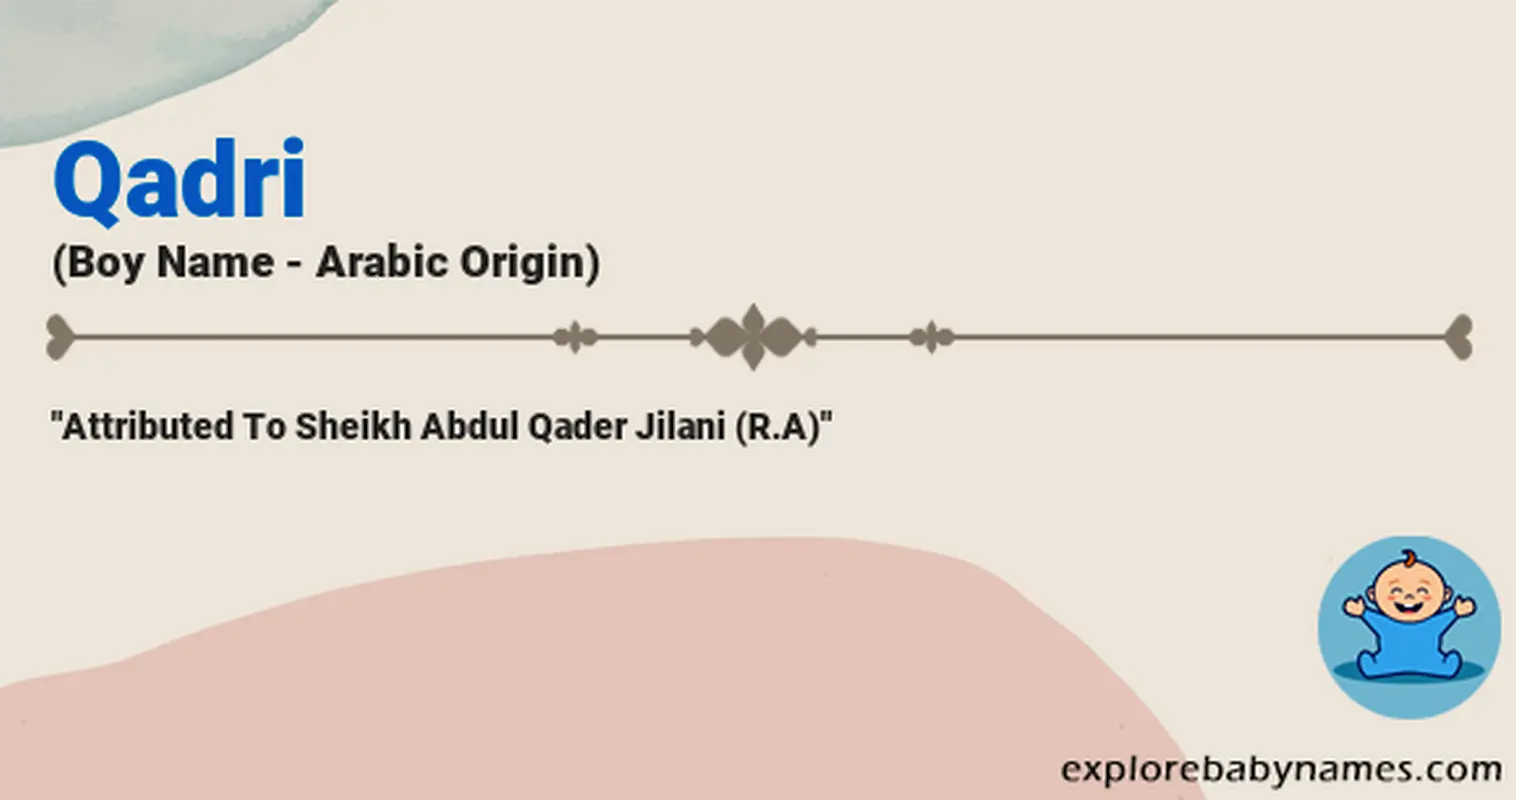 Meaning of Qadri